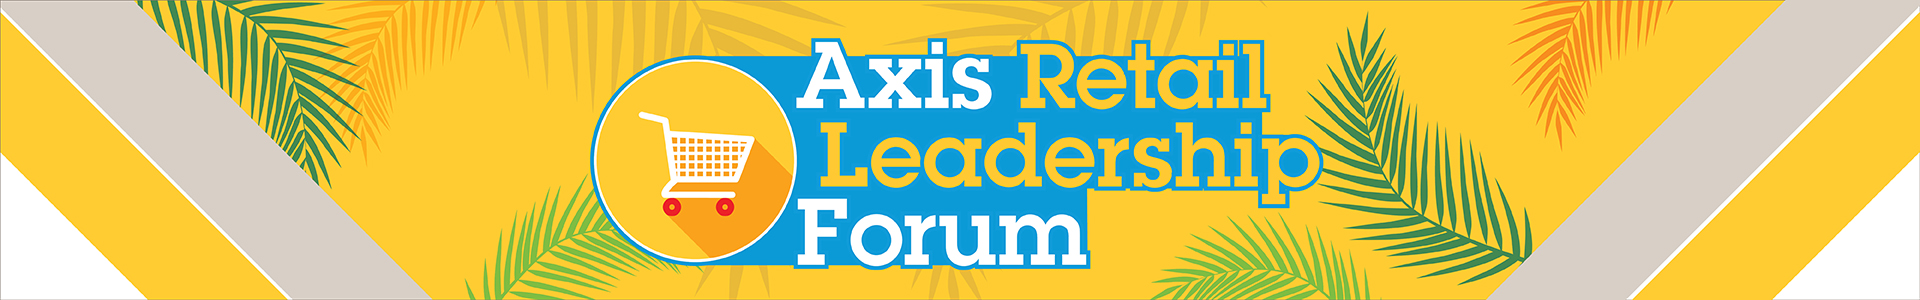 Axis Retail Leadership Forum - Sunnyvale